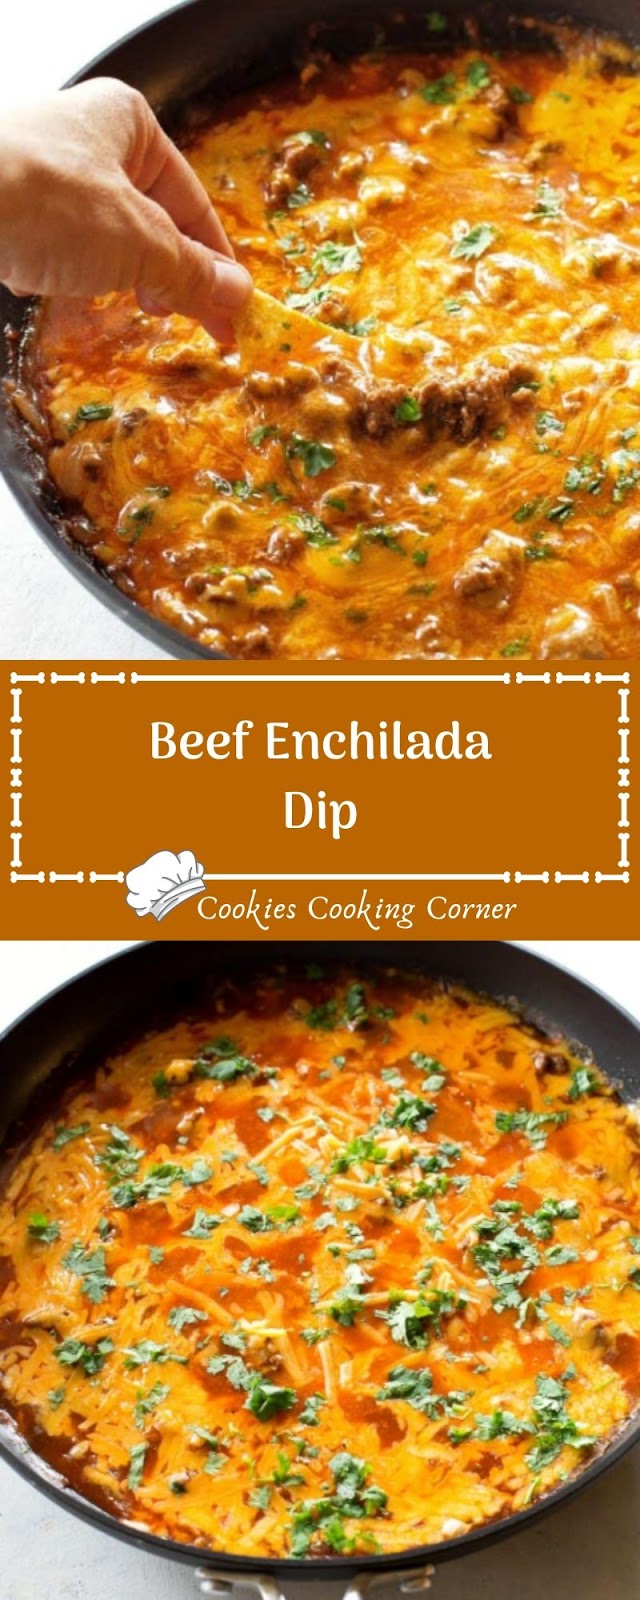 Beef Enchilada Dip